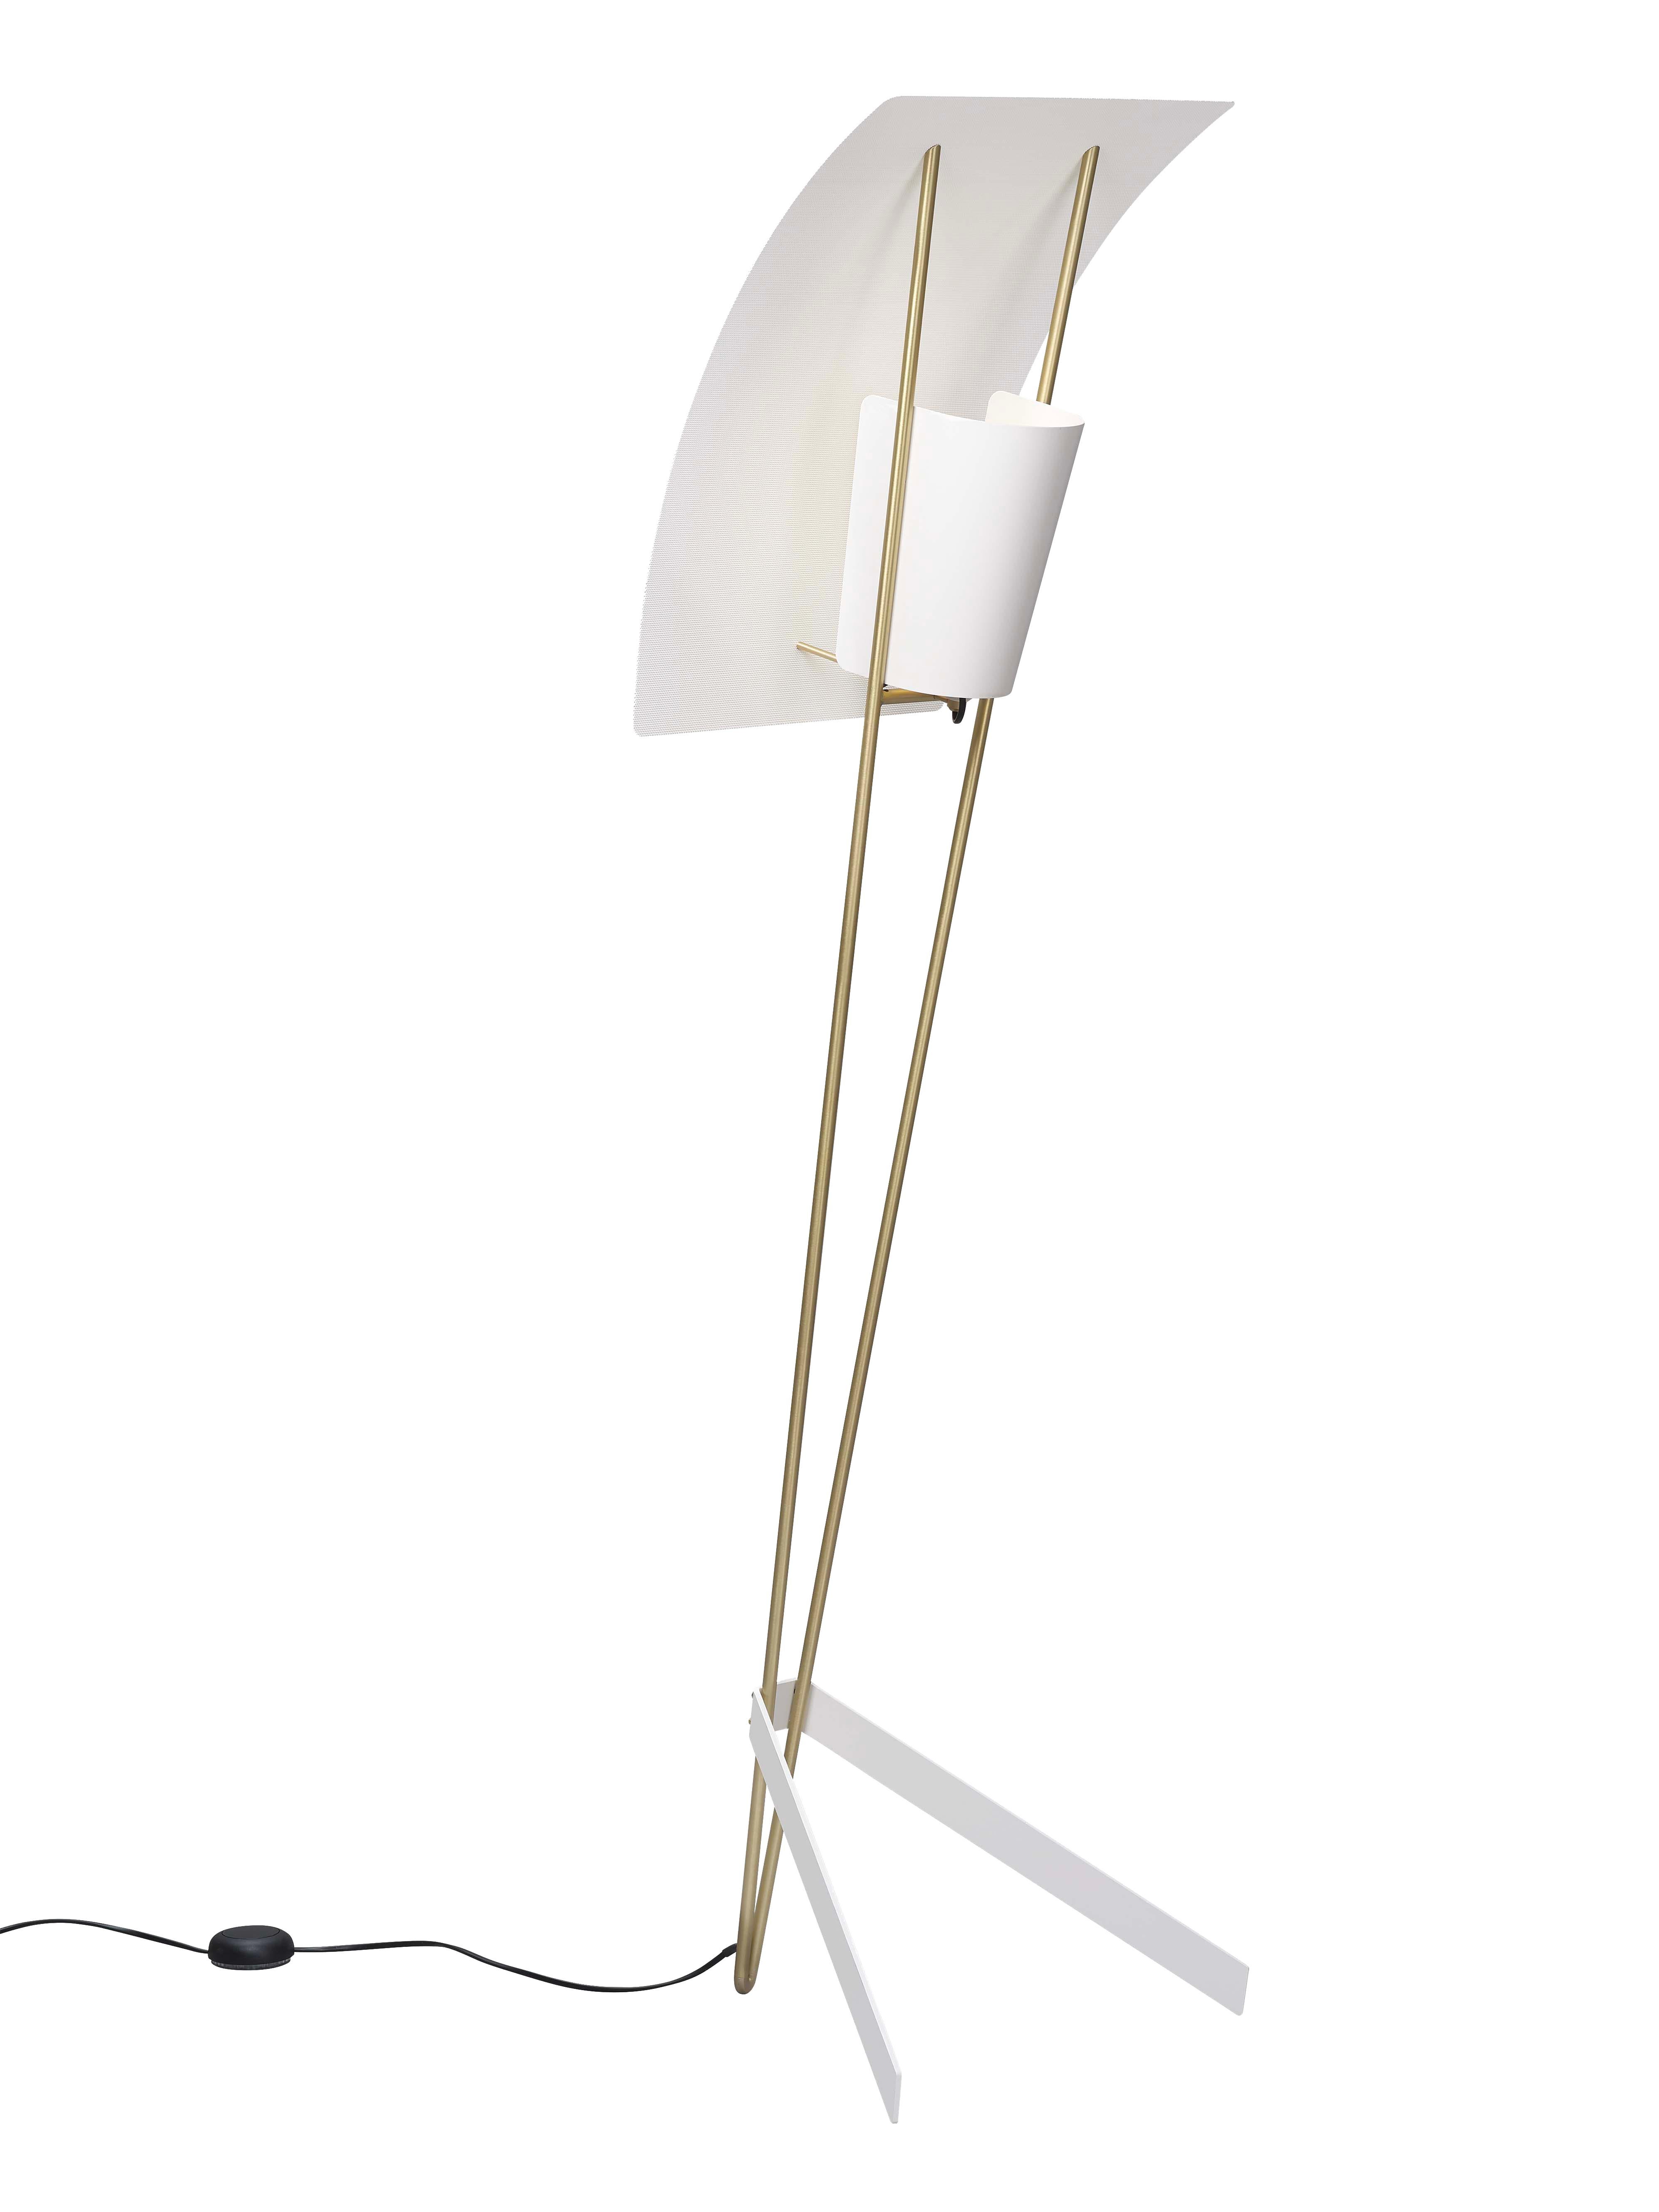 Pierre Guariche Kite Floor Lamp in Black and White for Sammode Studio For Sale 9